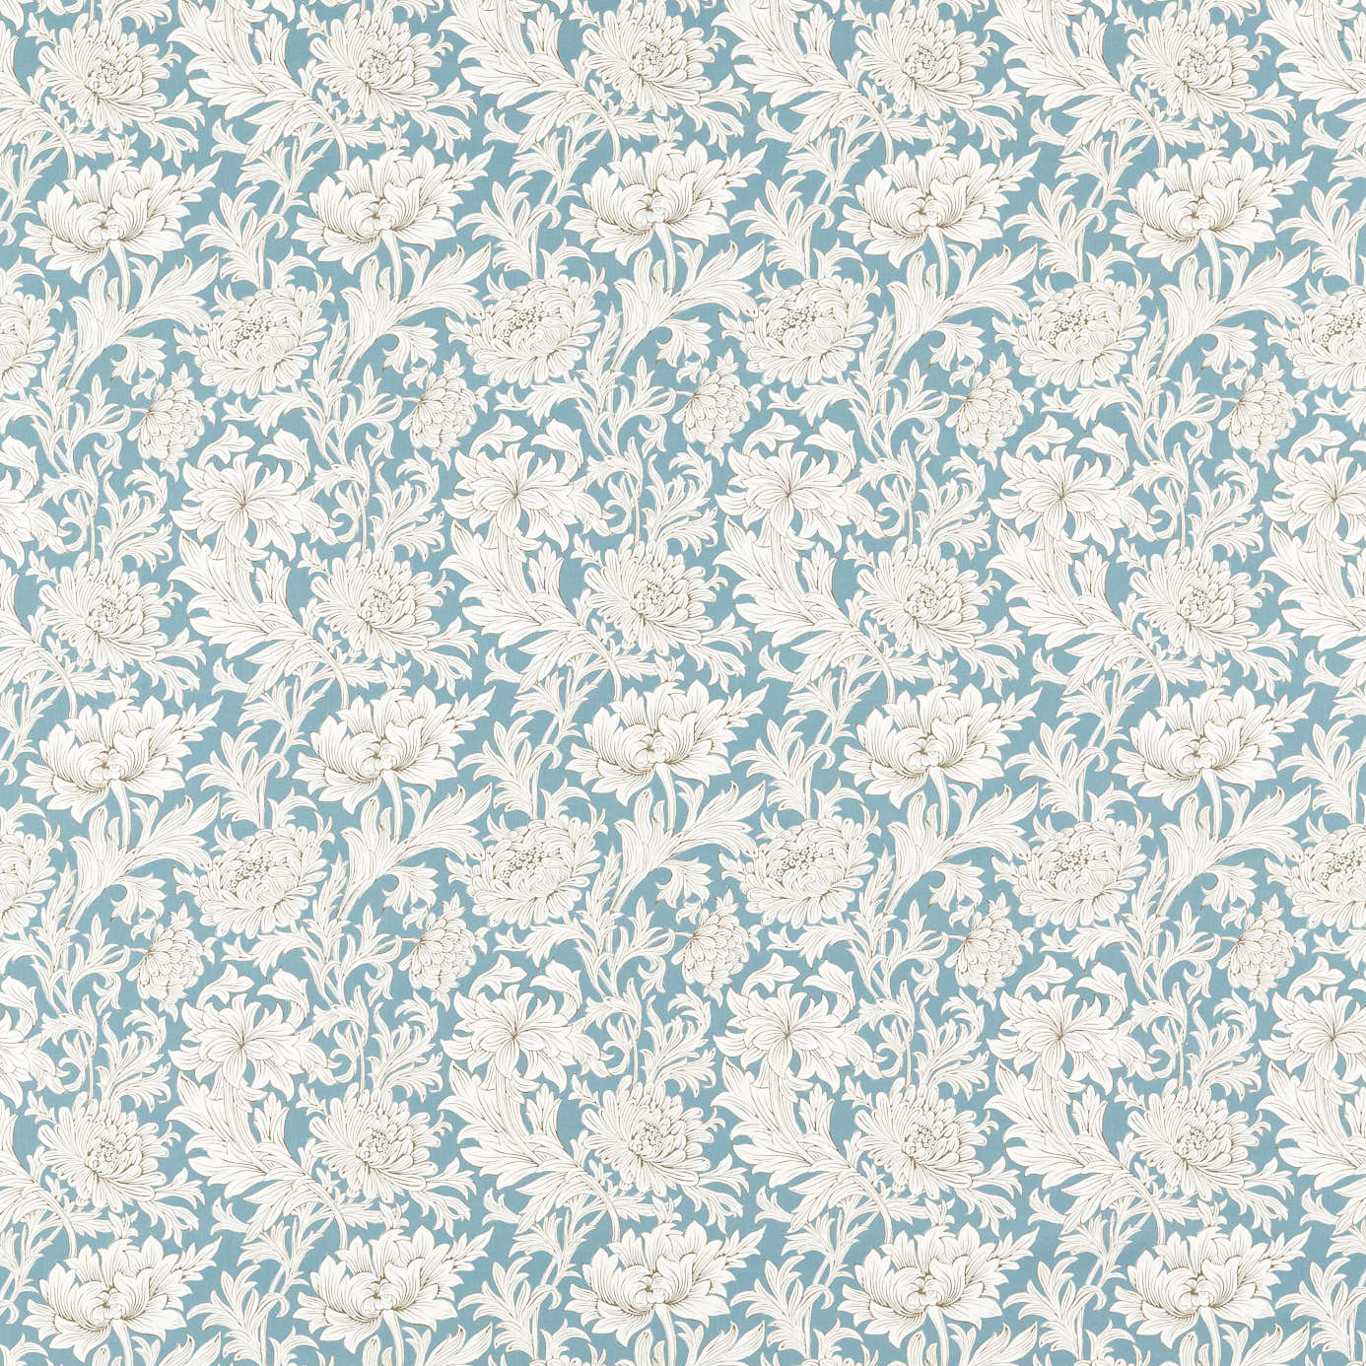 Chrysanthemum Toile Fabric by Morris & Co. - MSIM226912 - Slate